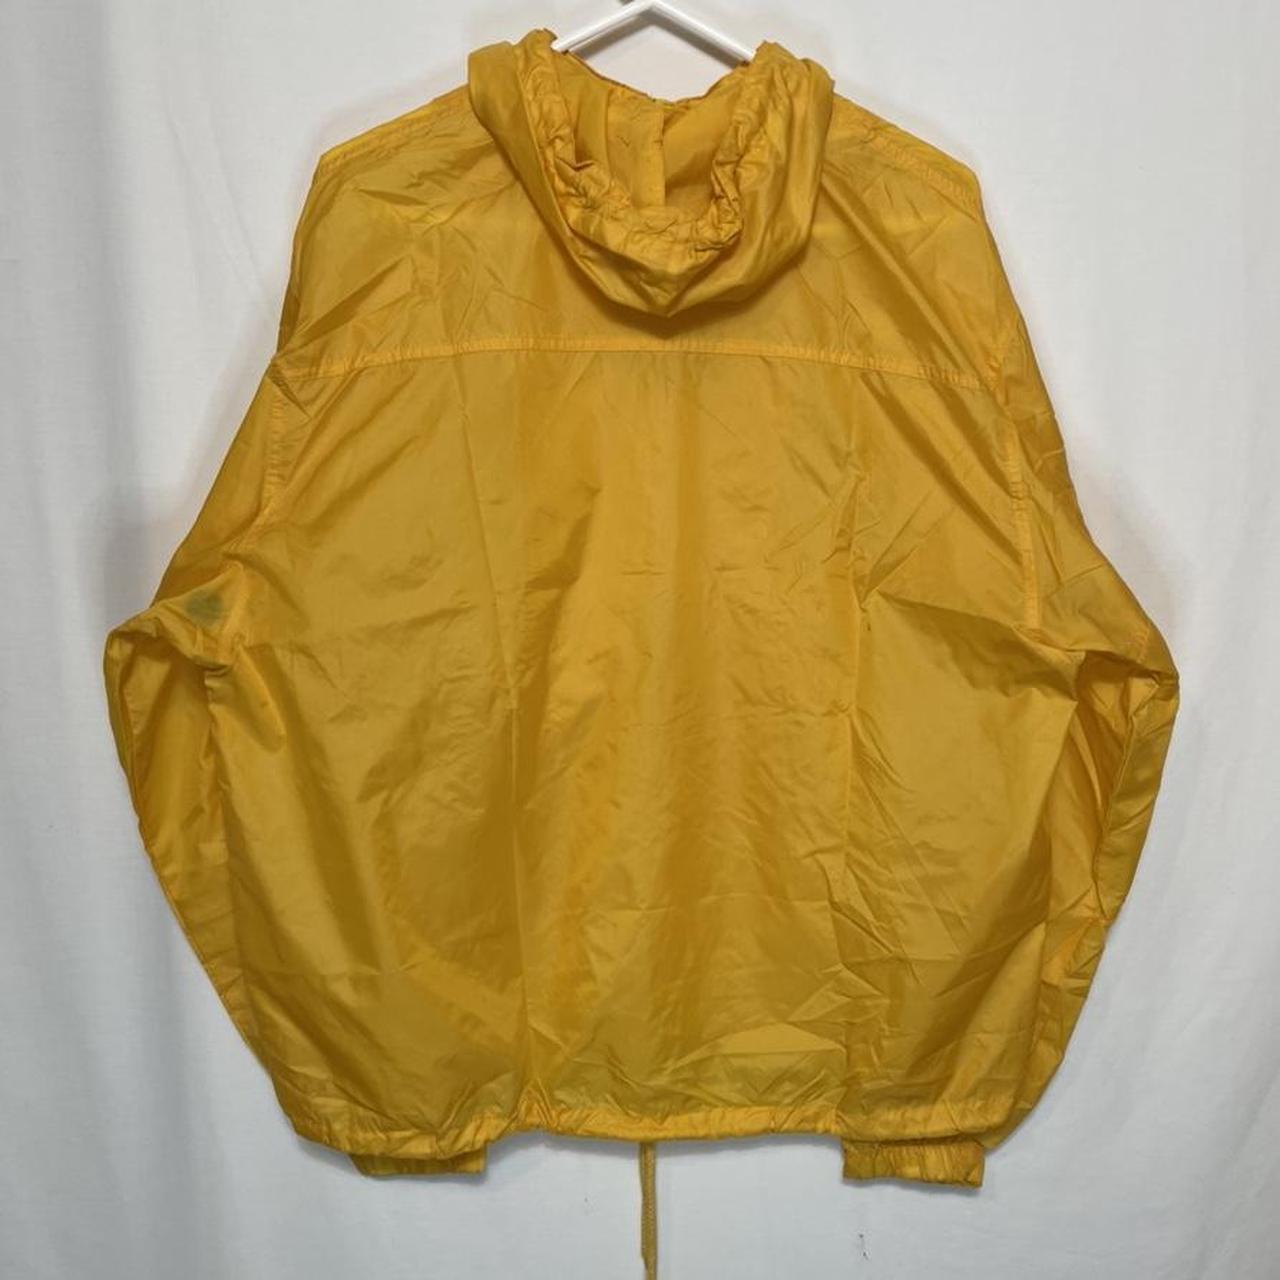 Vintage Izod Anorak Jacket Great condition! No major... - Depop